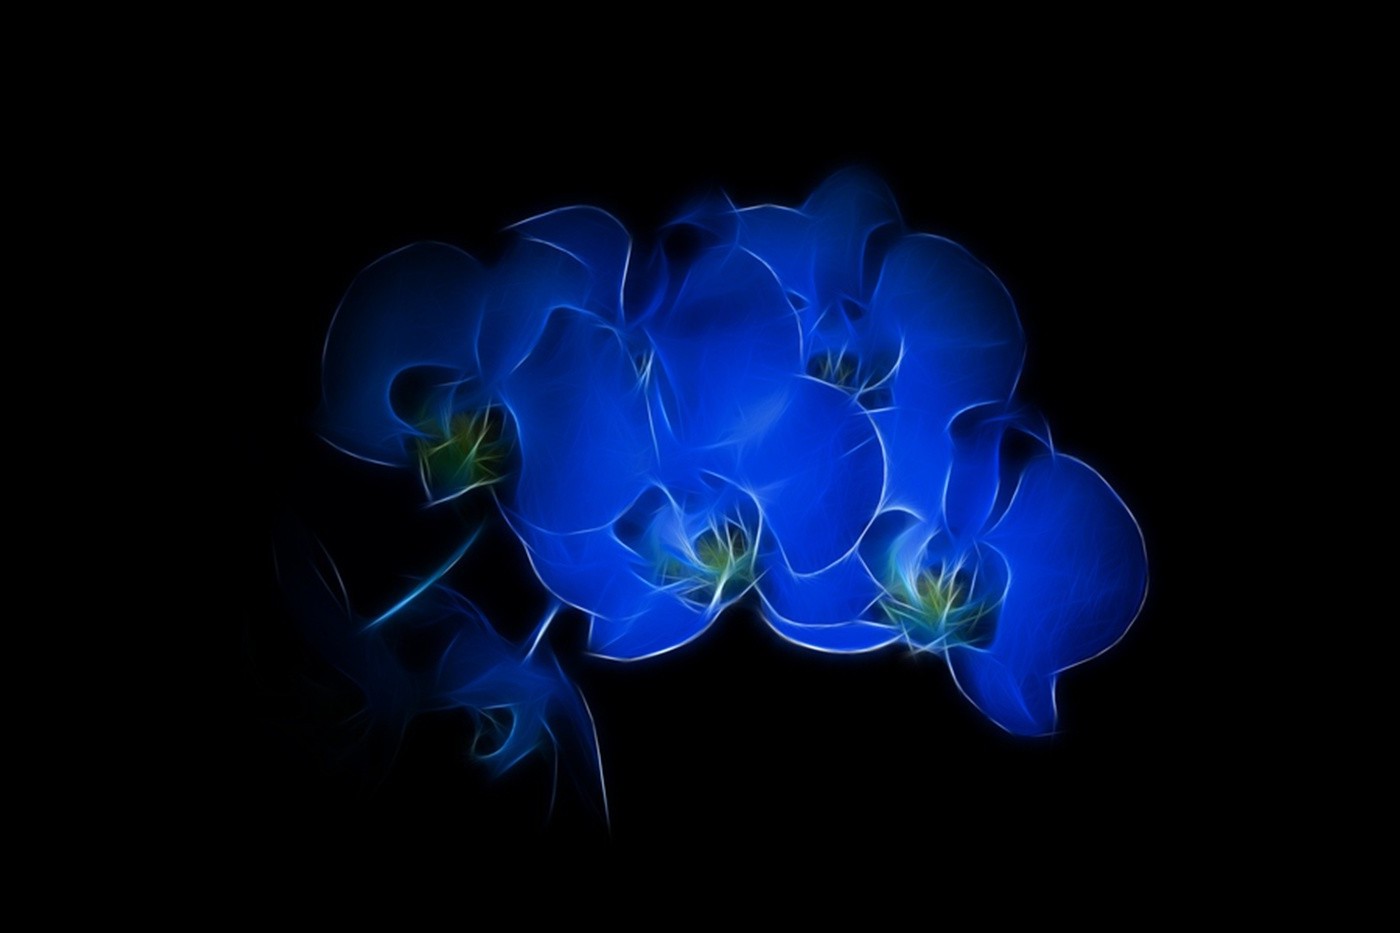 Fractalius Black  Background  Flowers  Blue Flowers  